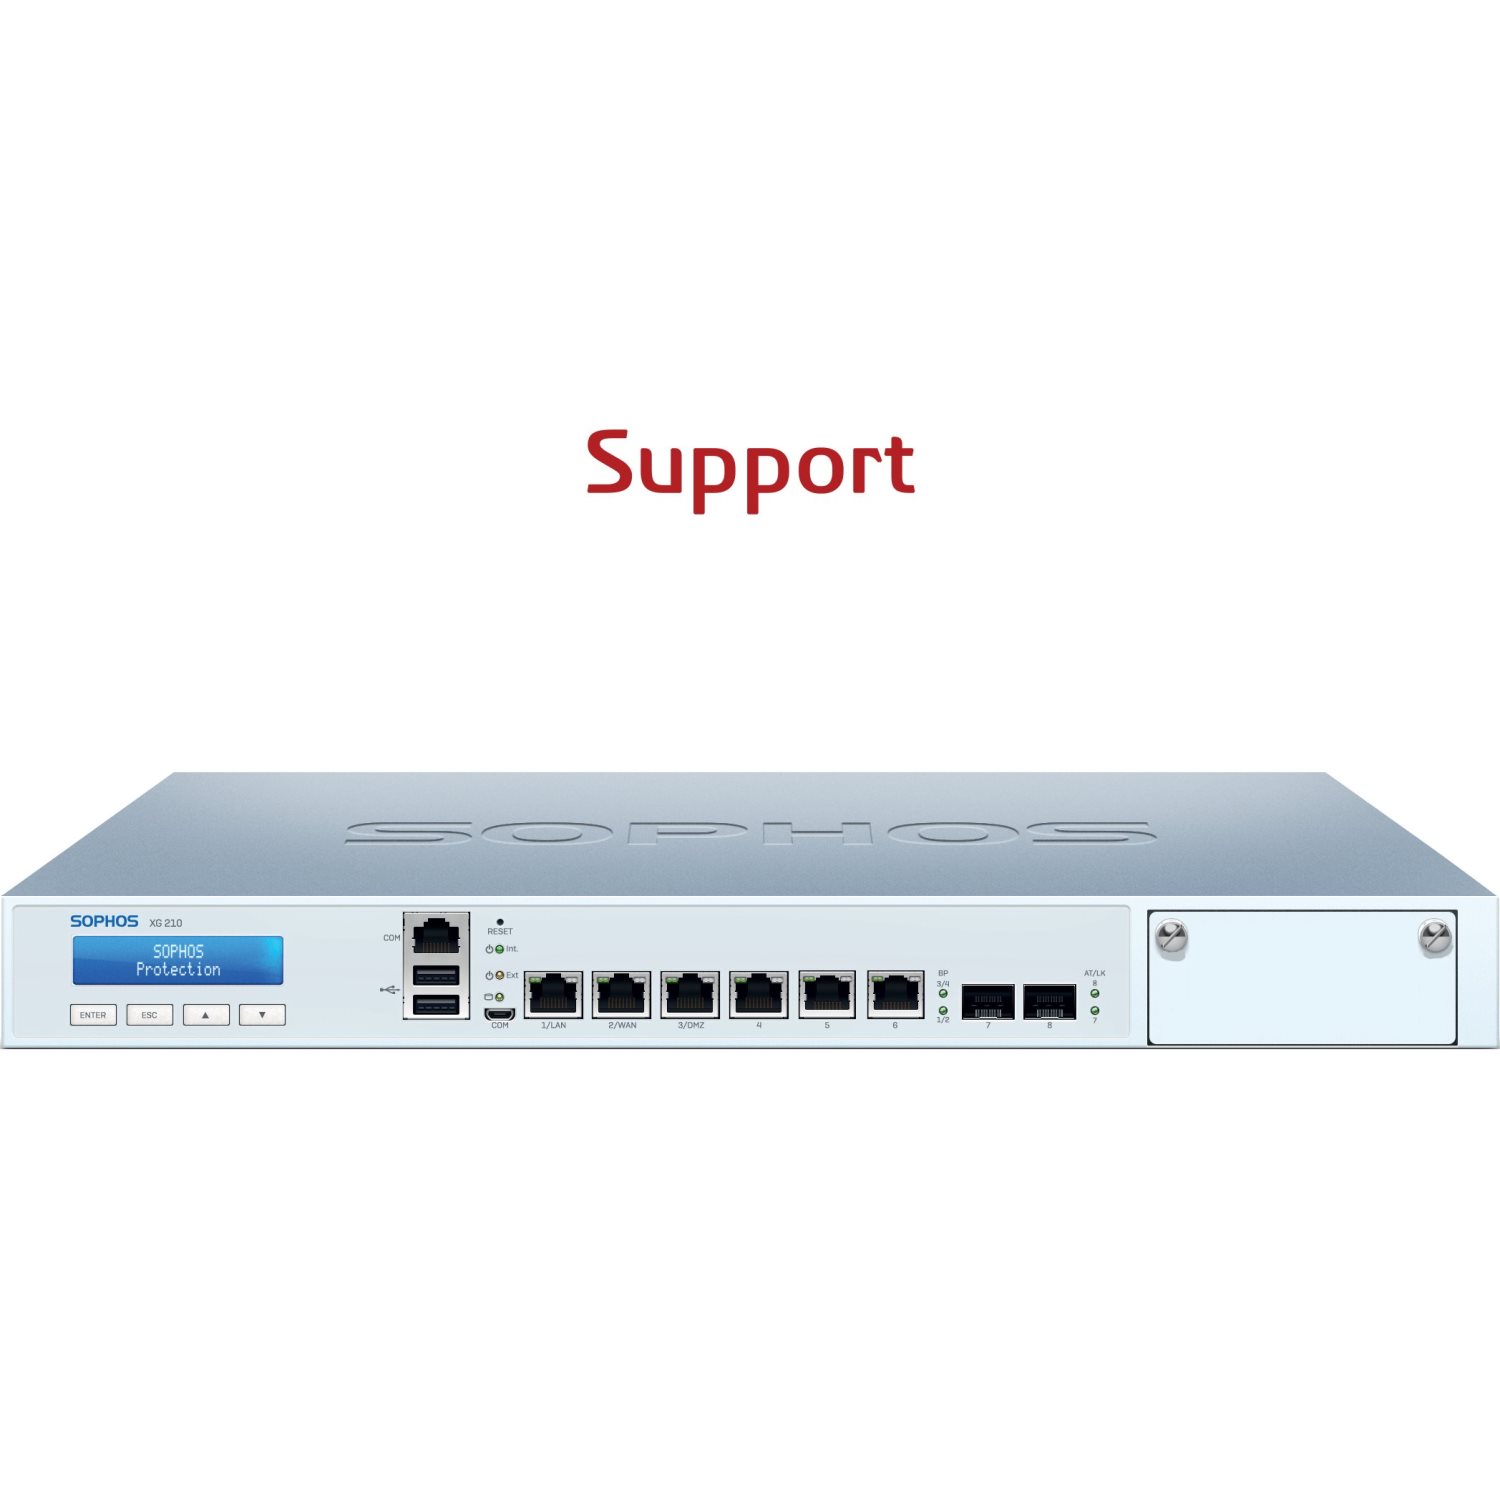  XG / XGS FireWall Support pour Firewall Sophos XG 210 XG210